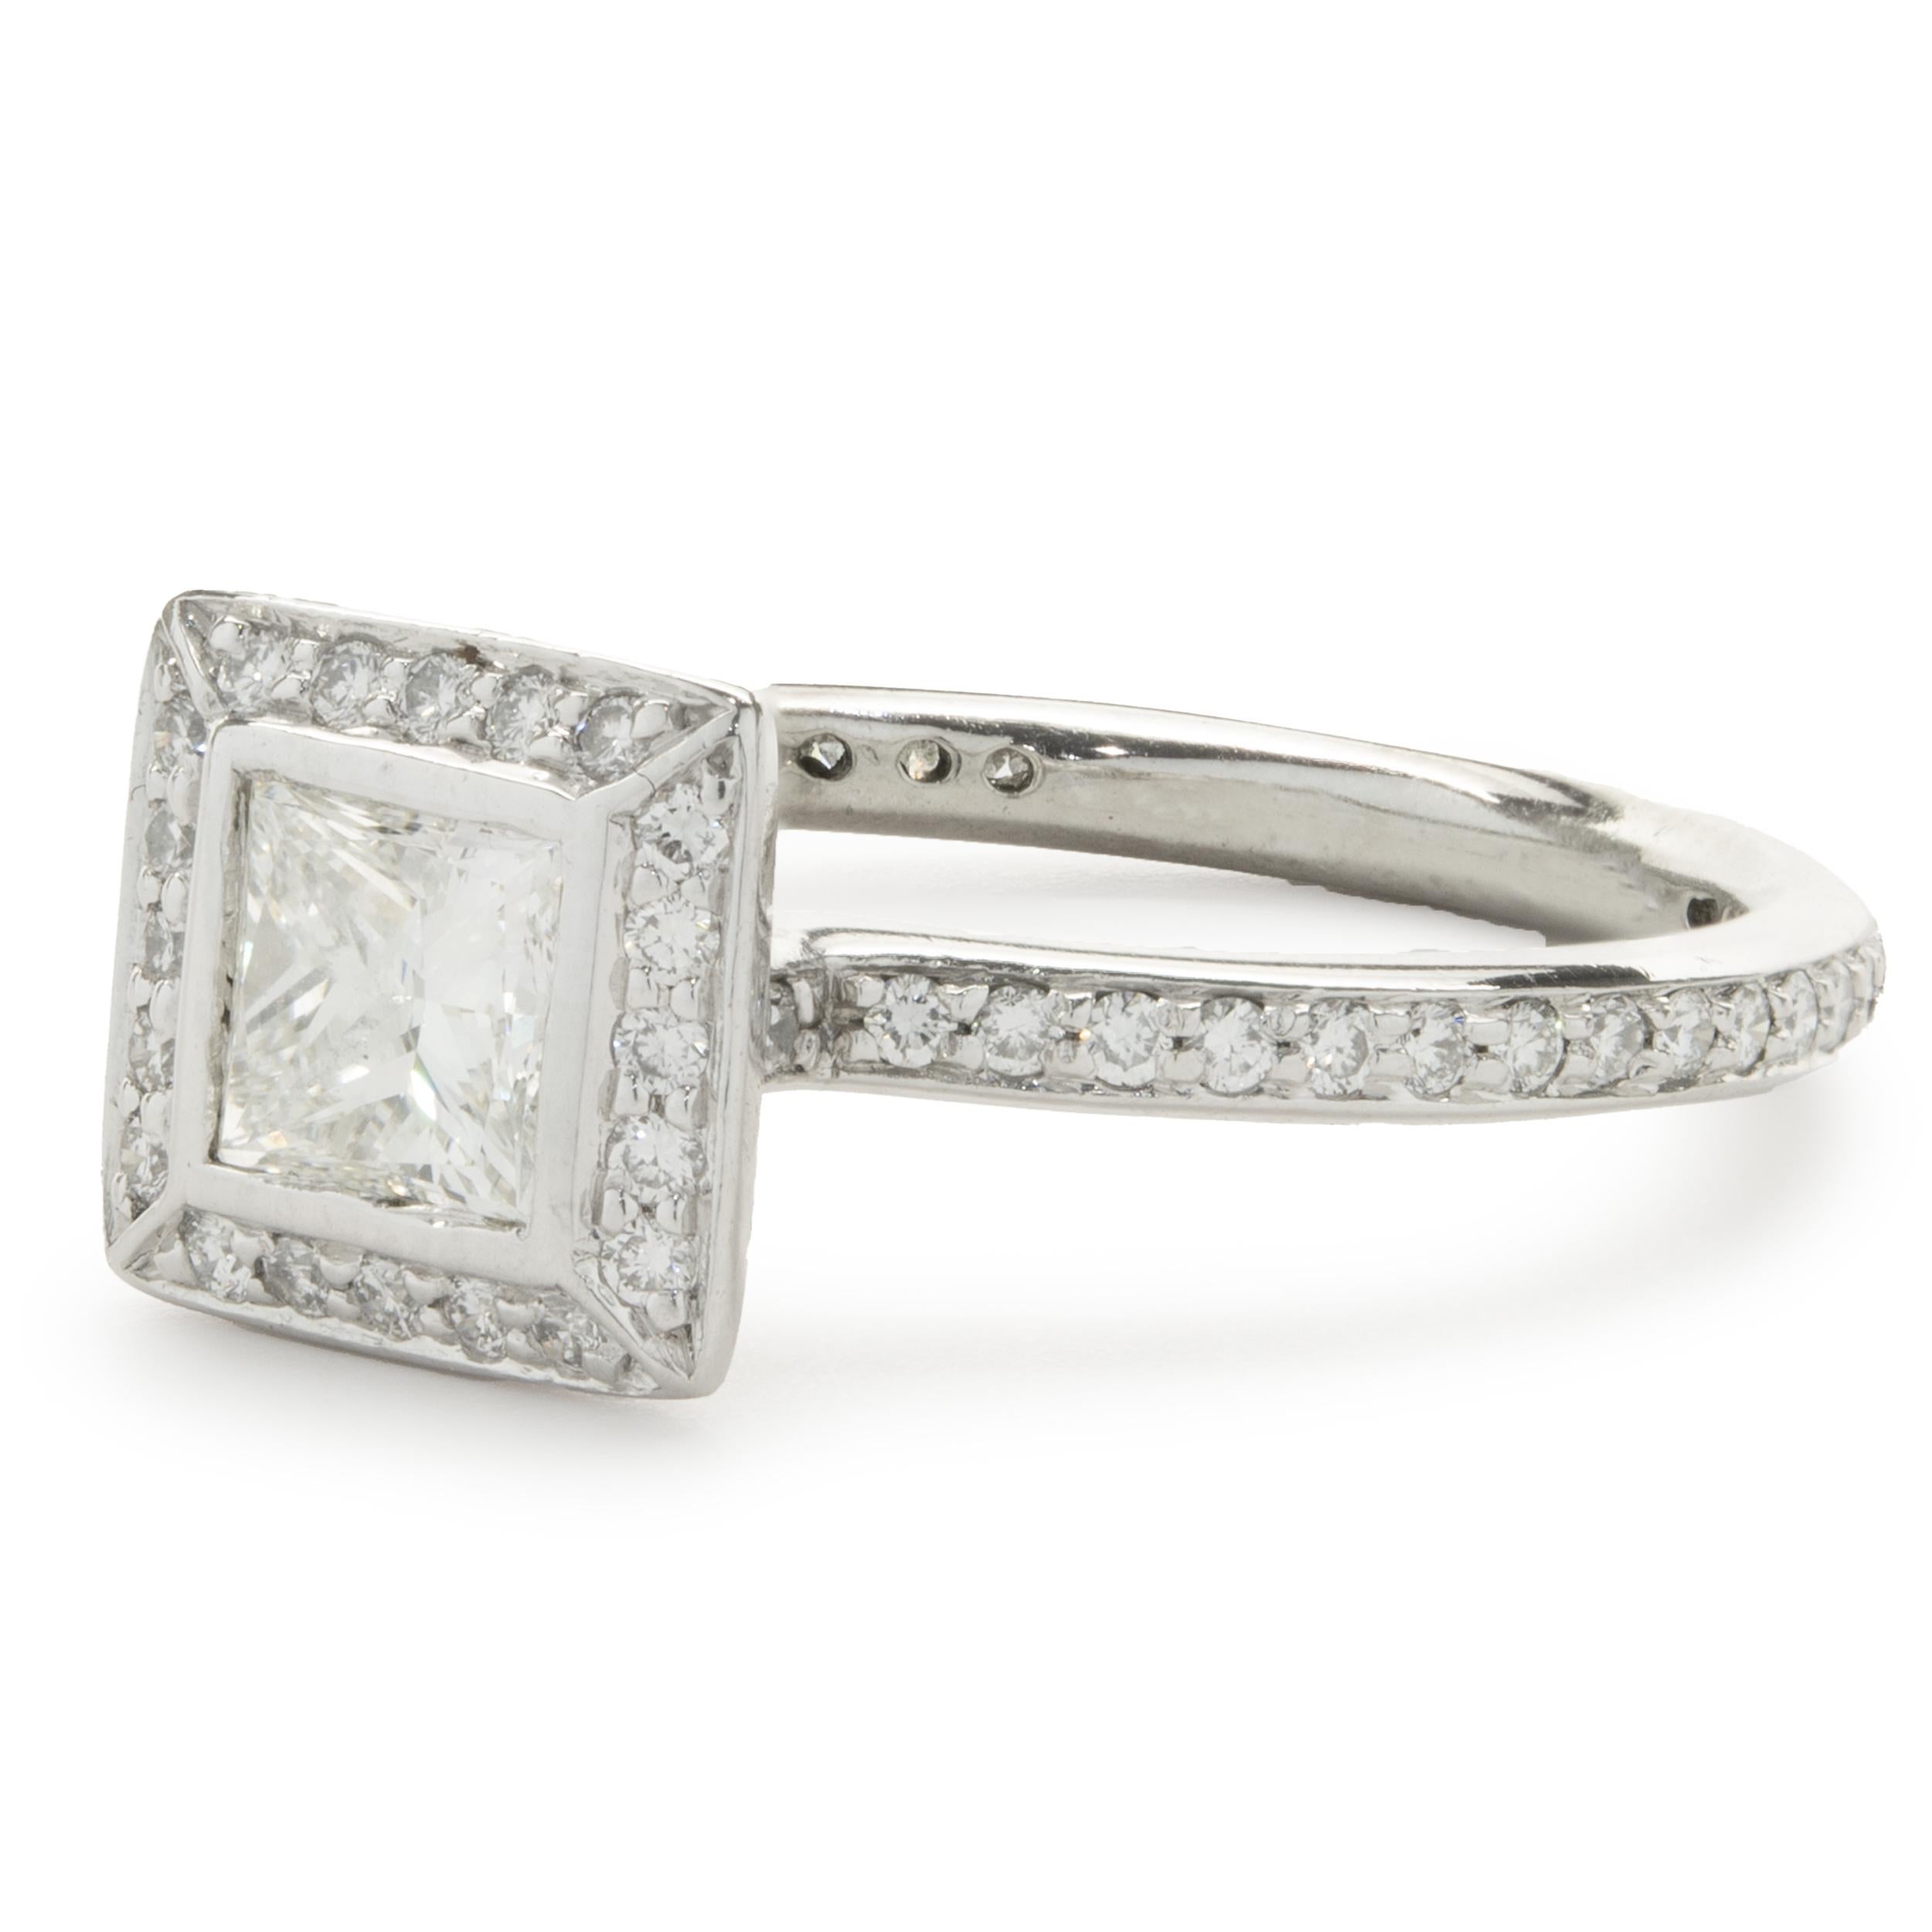 Ritani Platinum Princess Cut Diamond Engagement Ring In Excellent Condition For Sale In Scottsdale, AZ